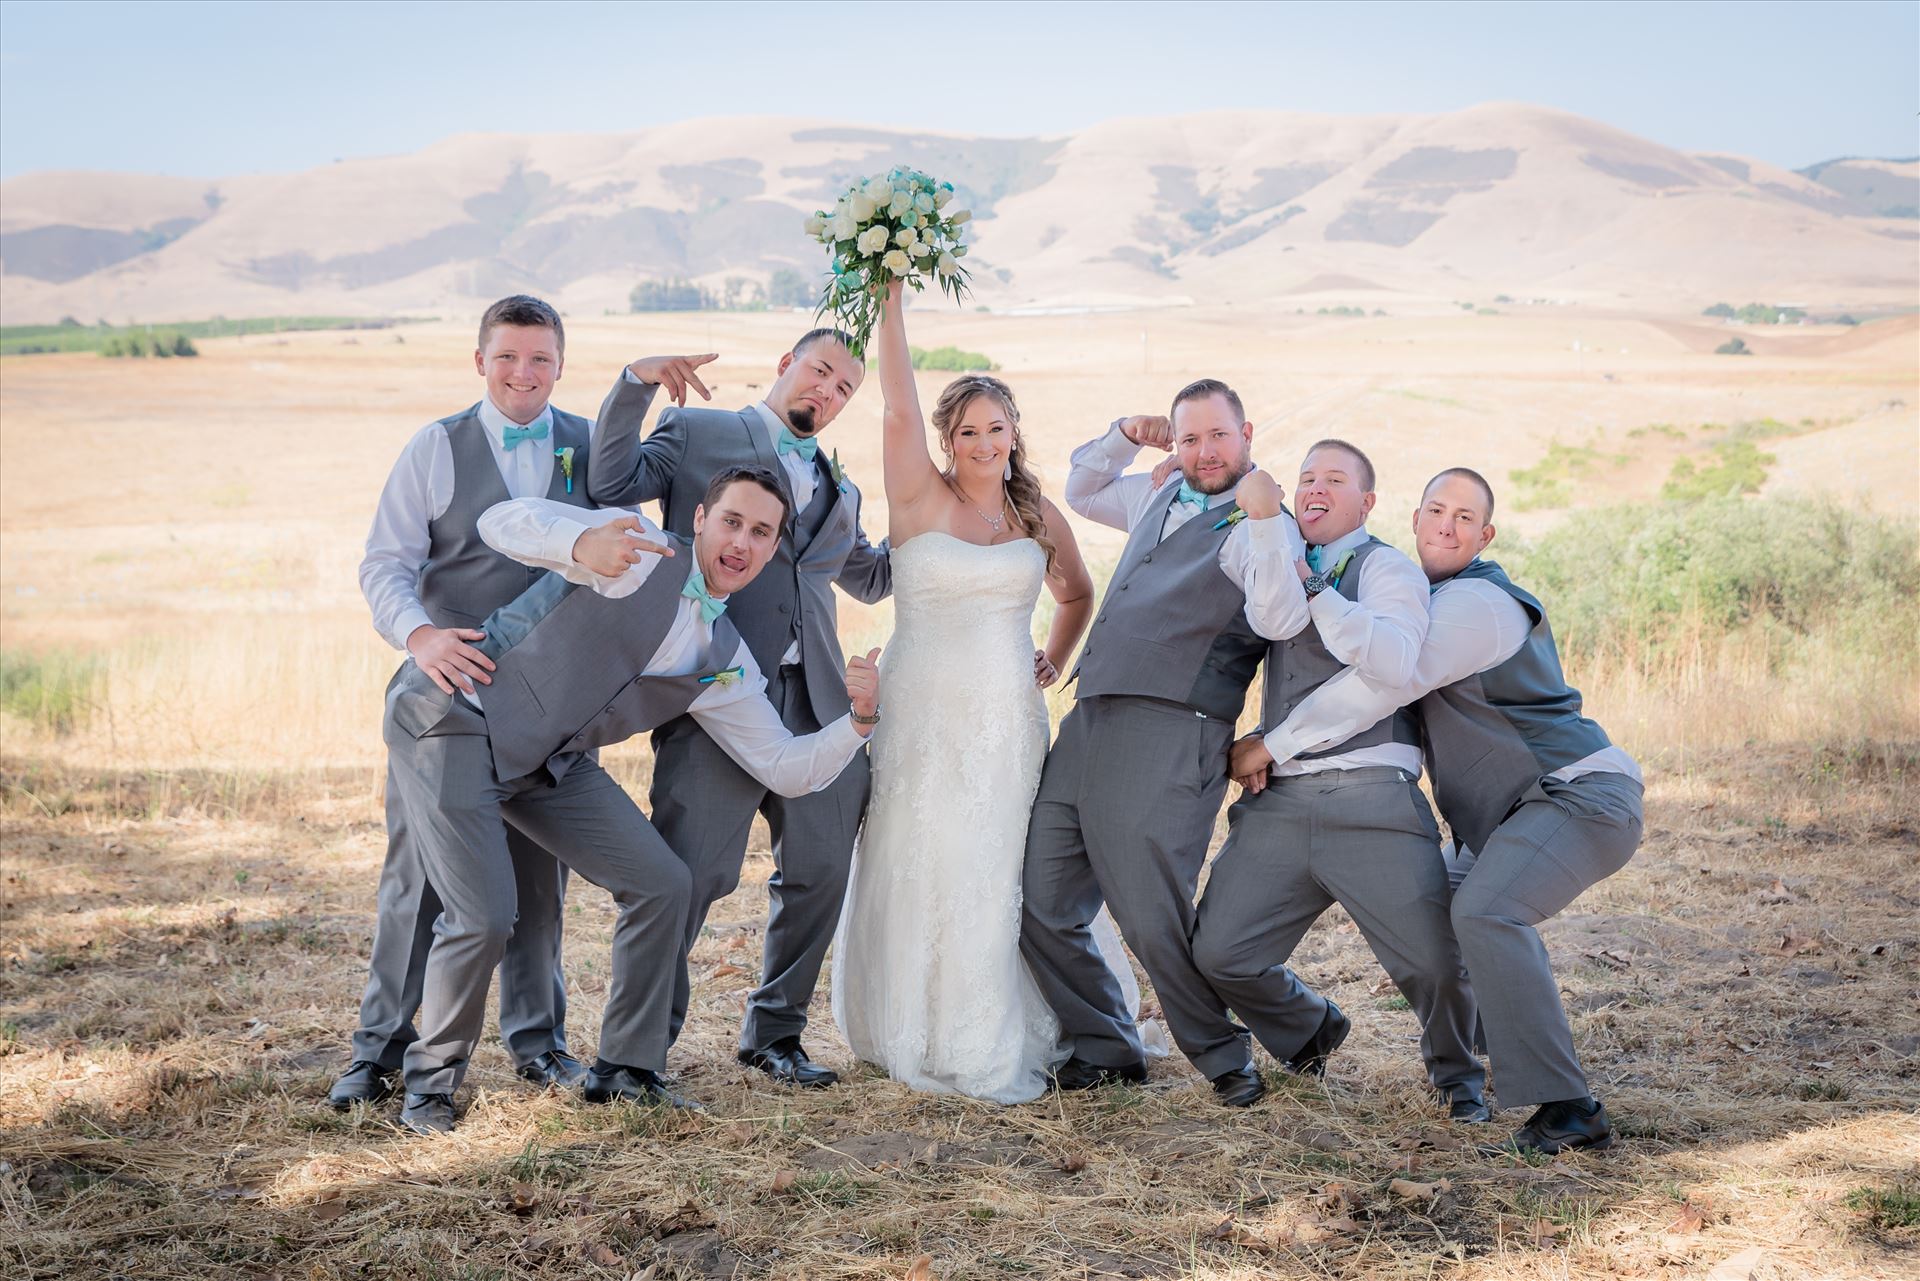 Cherie and Brandon 069 - Mirror's Edge Photography, a San Luis Obispo Wedding Photographer, captures a wedding at the Historic Dana Adobe in Nipomo California.  Fun bride and groomsmen. by Sarah Williams